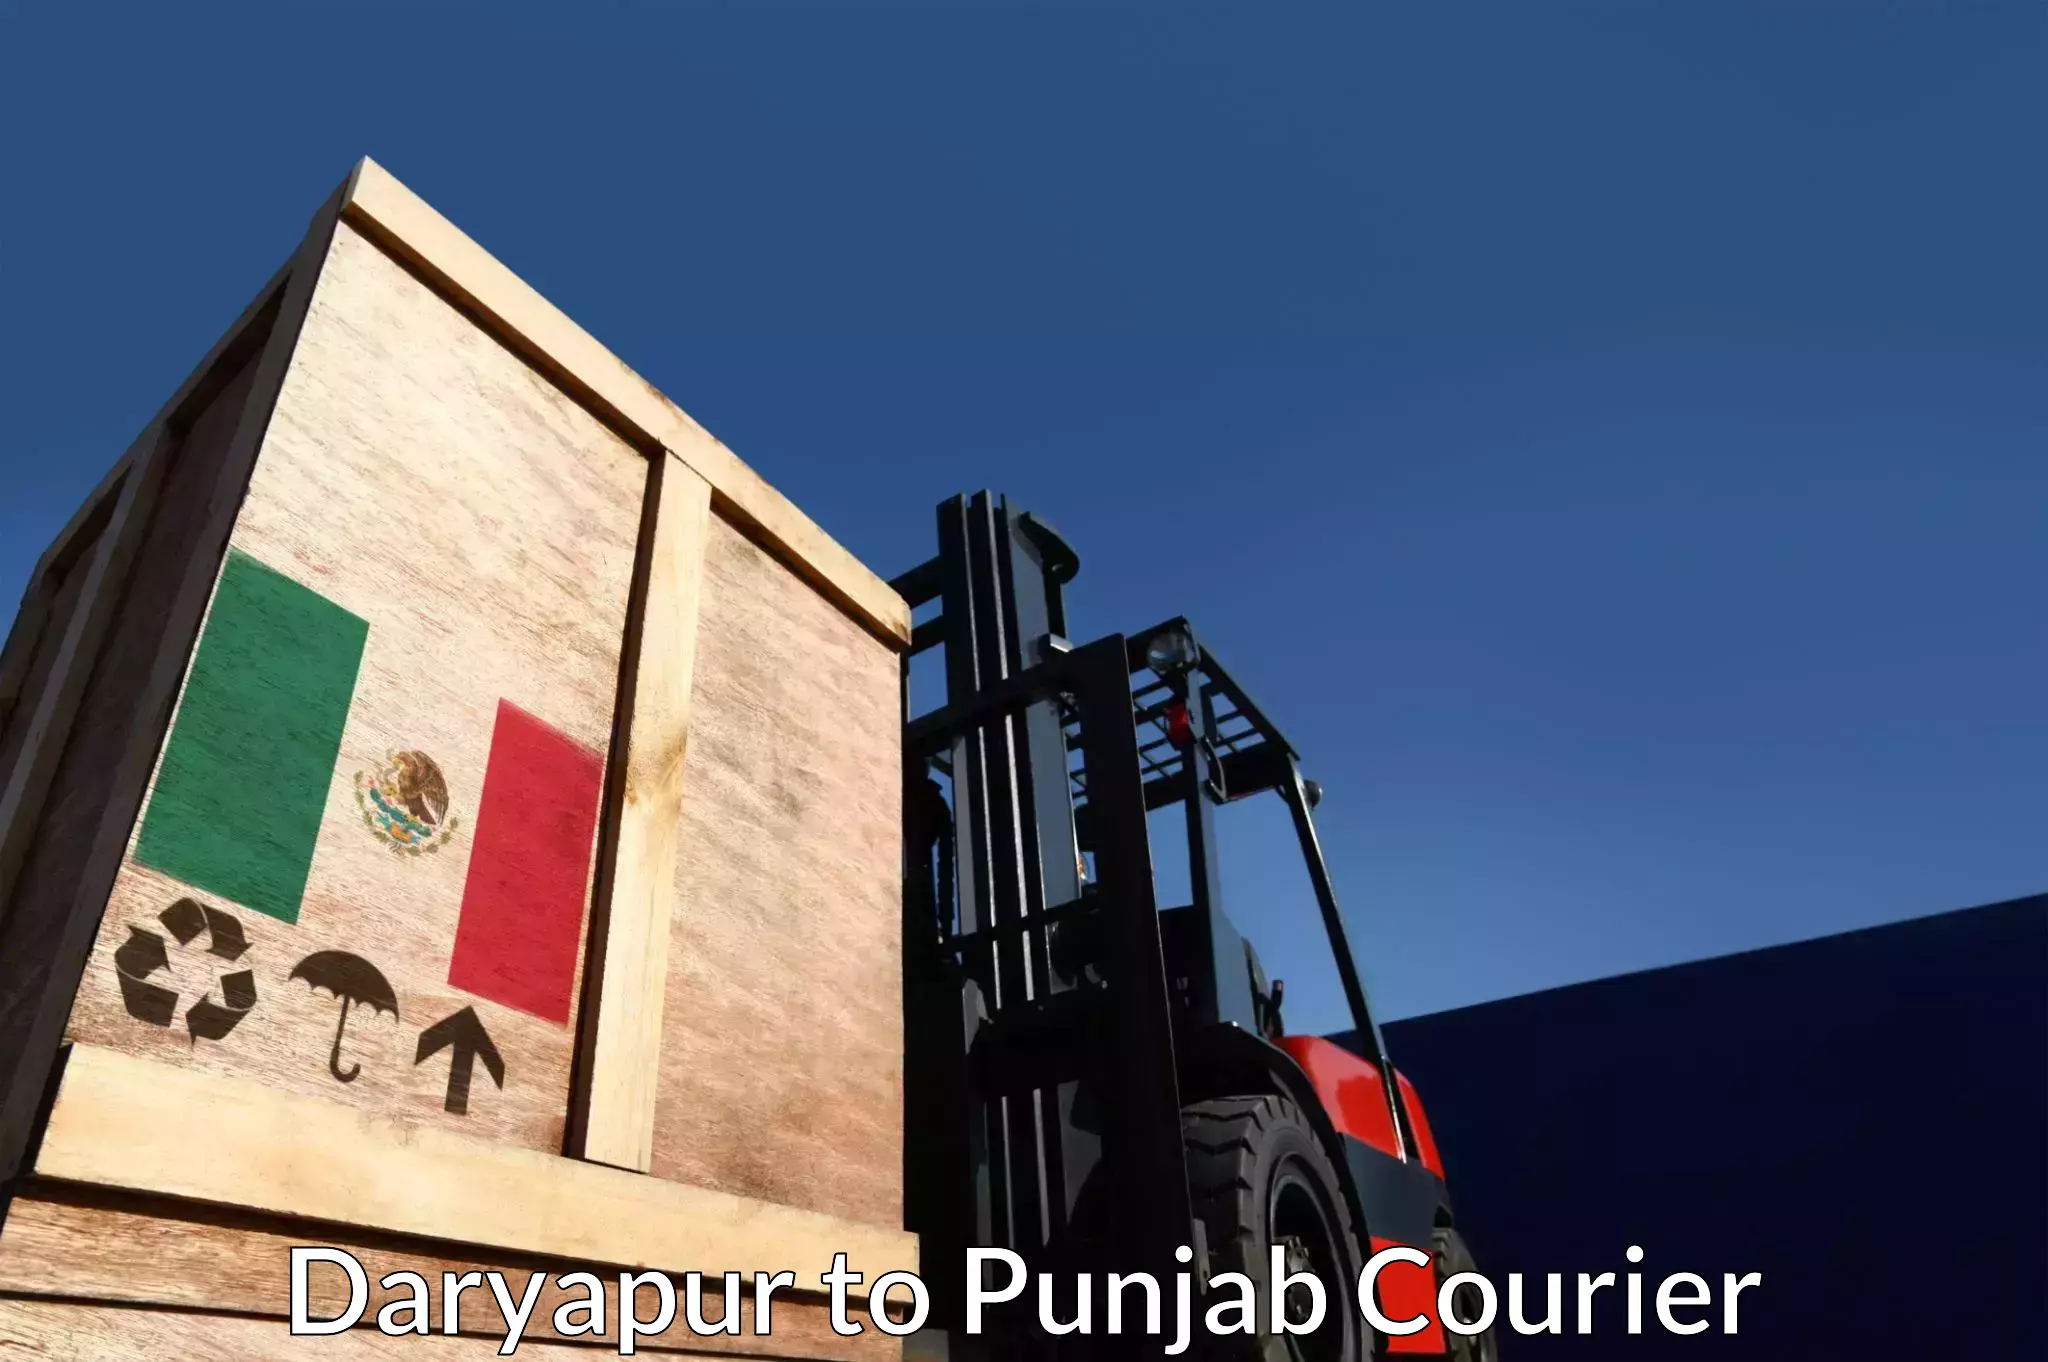 Advanced shipping network Daryapur to Jalandhar